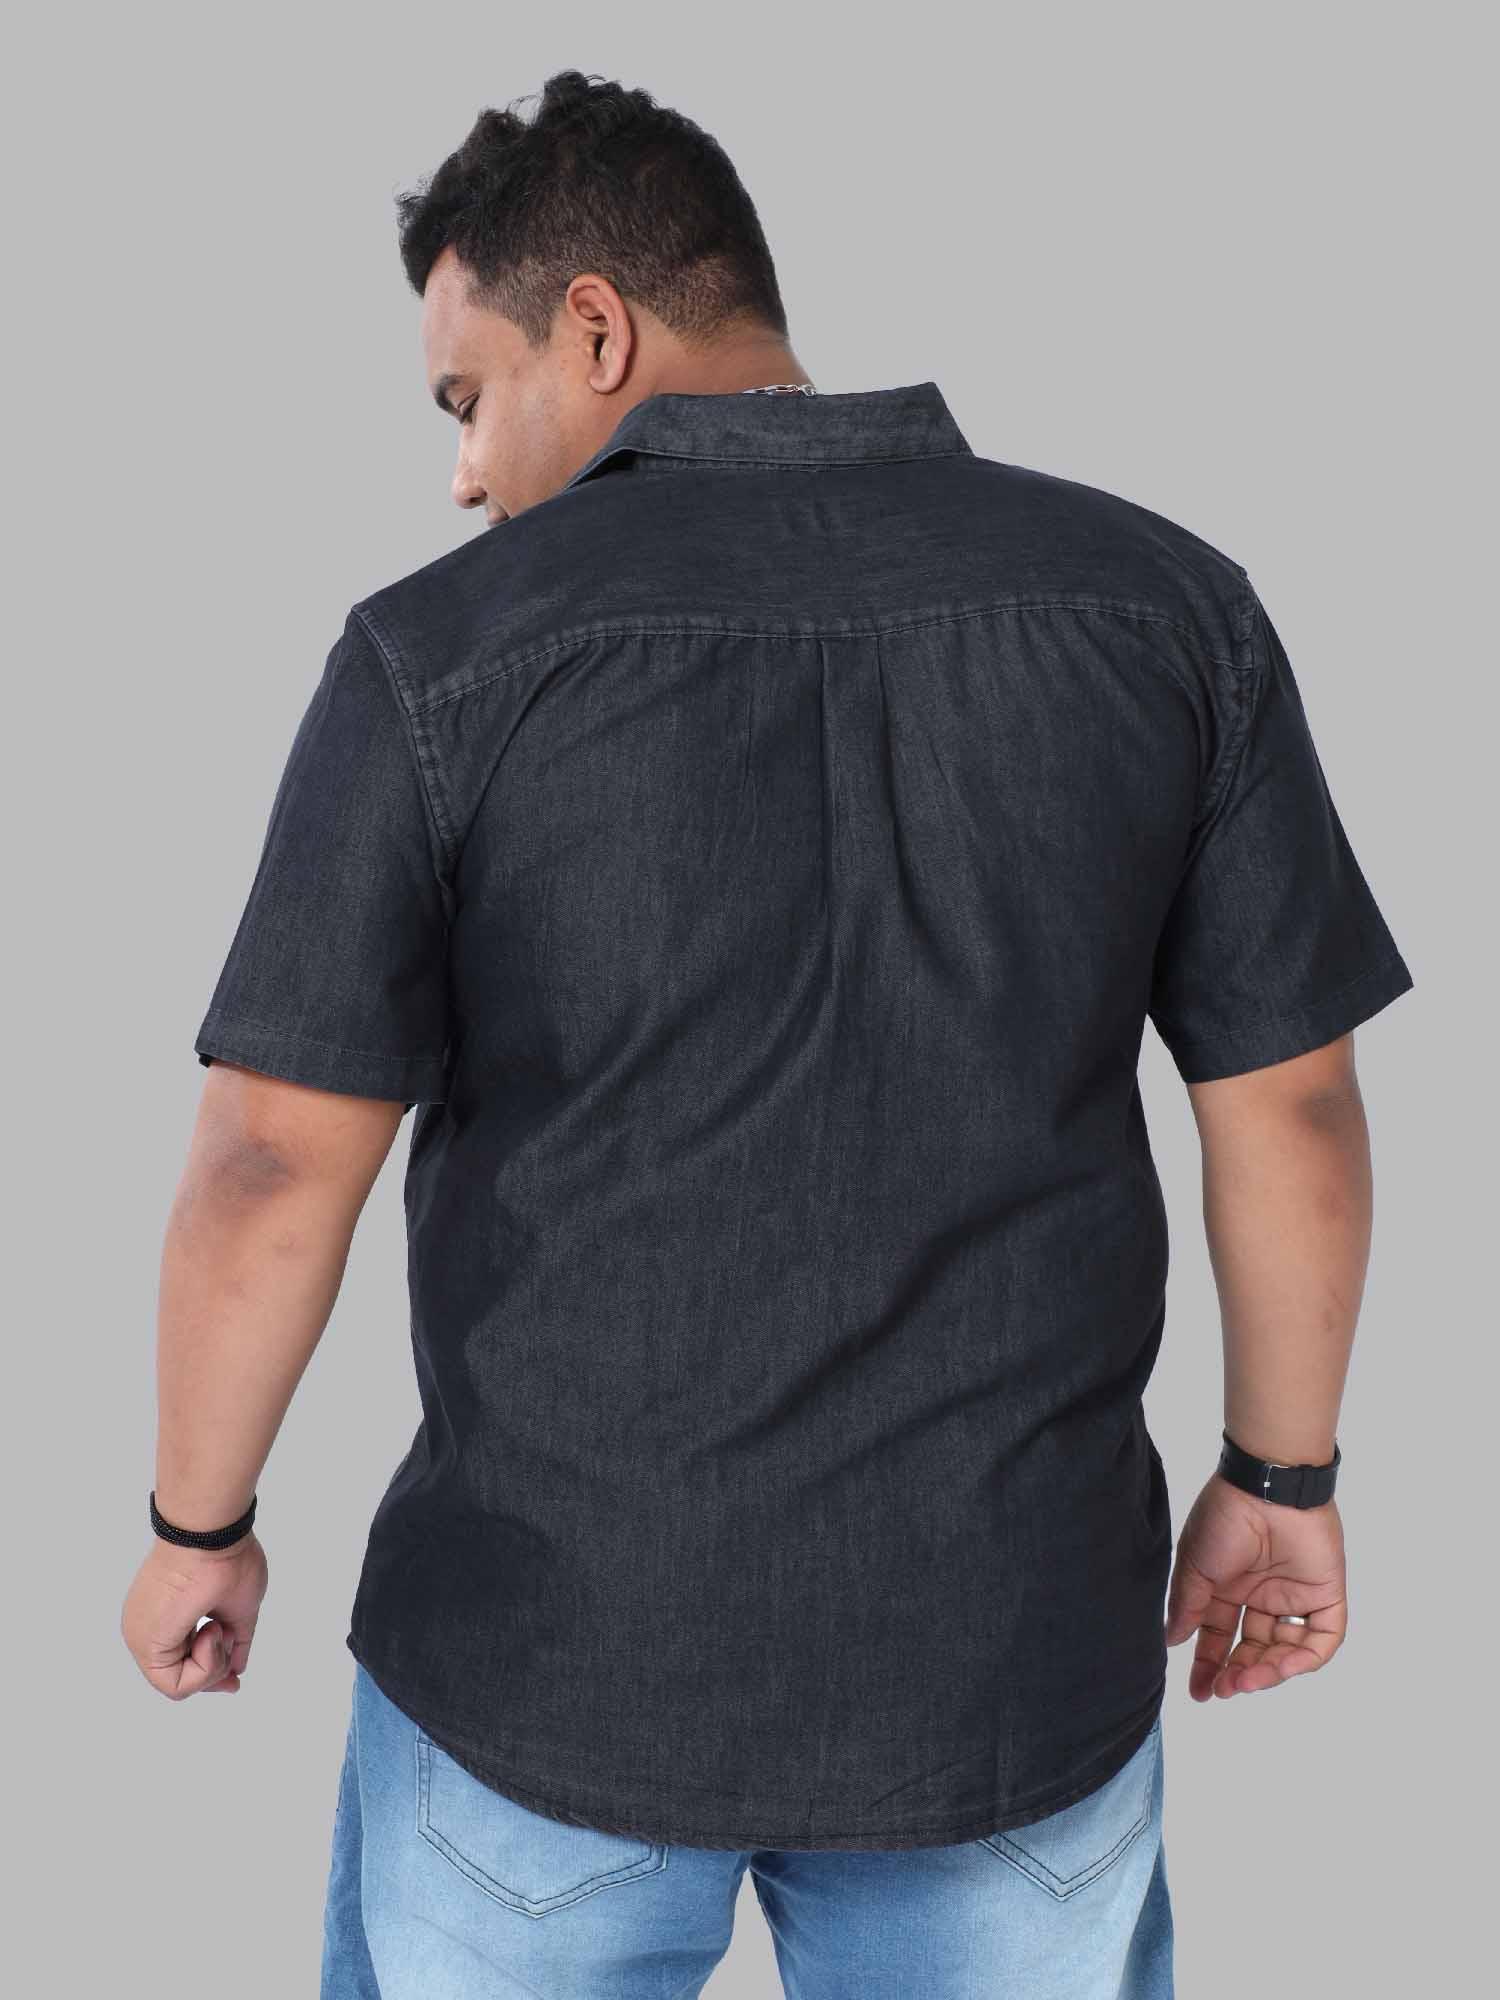 Grey Denim Single Pocket Half Sleeve Shirt Men's Plus Size - Guniaa Fashions